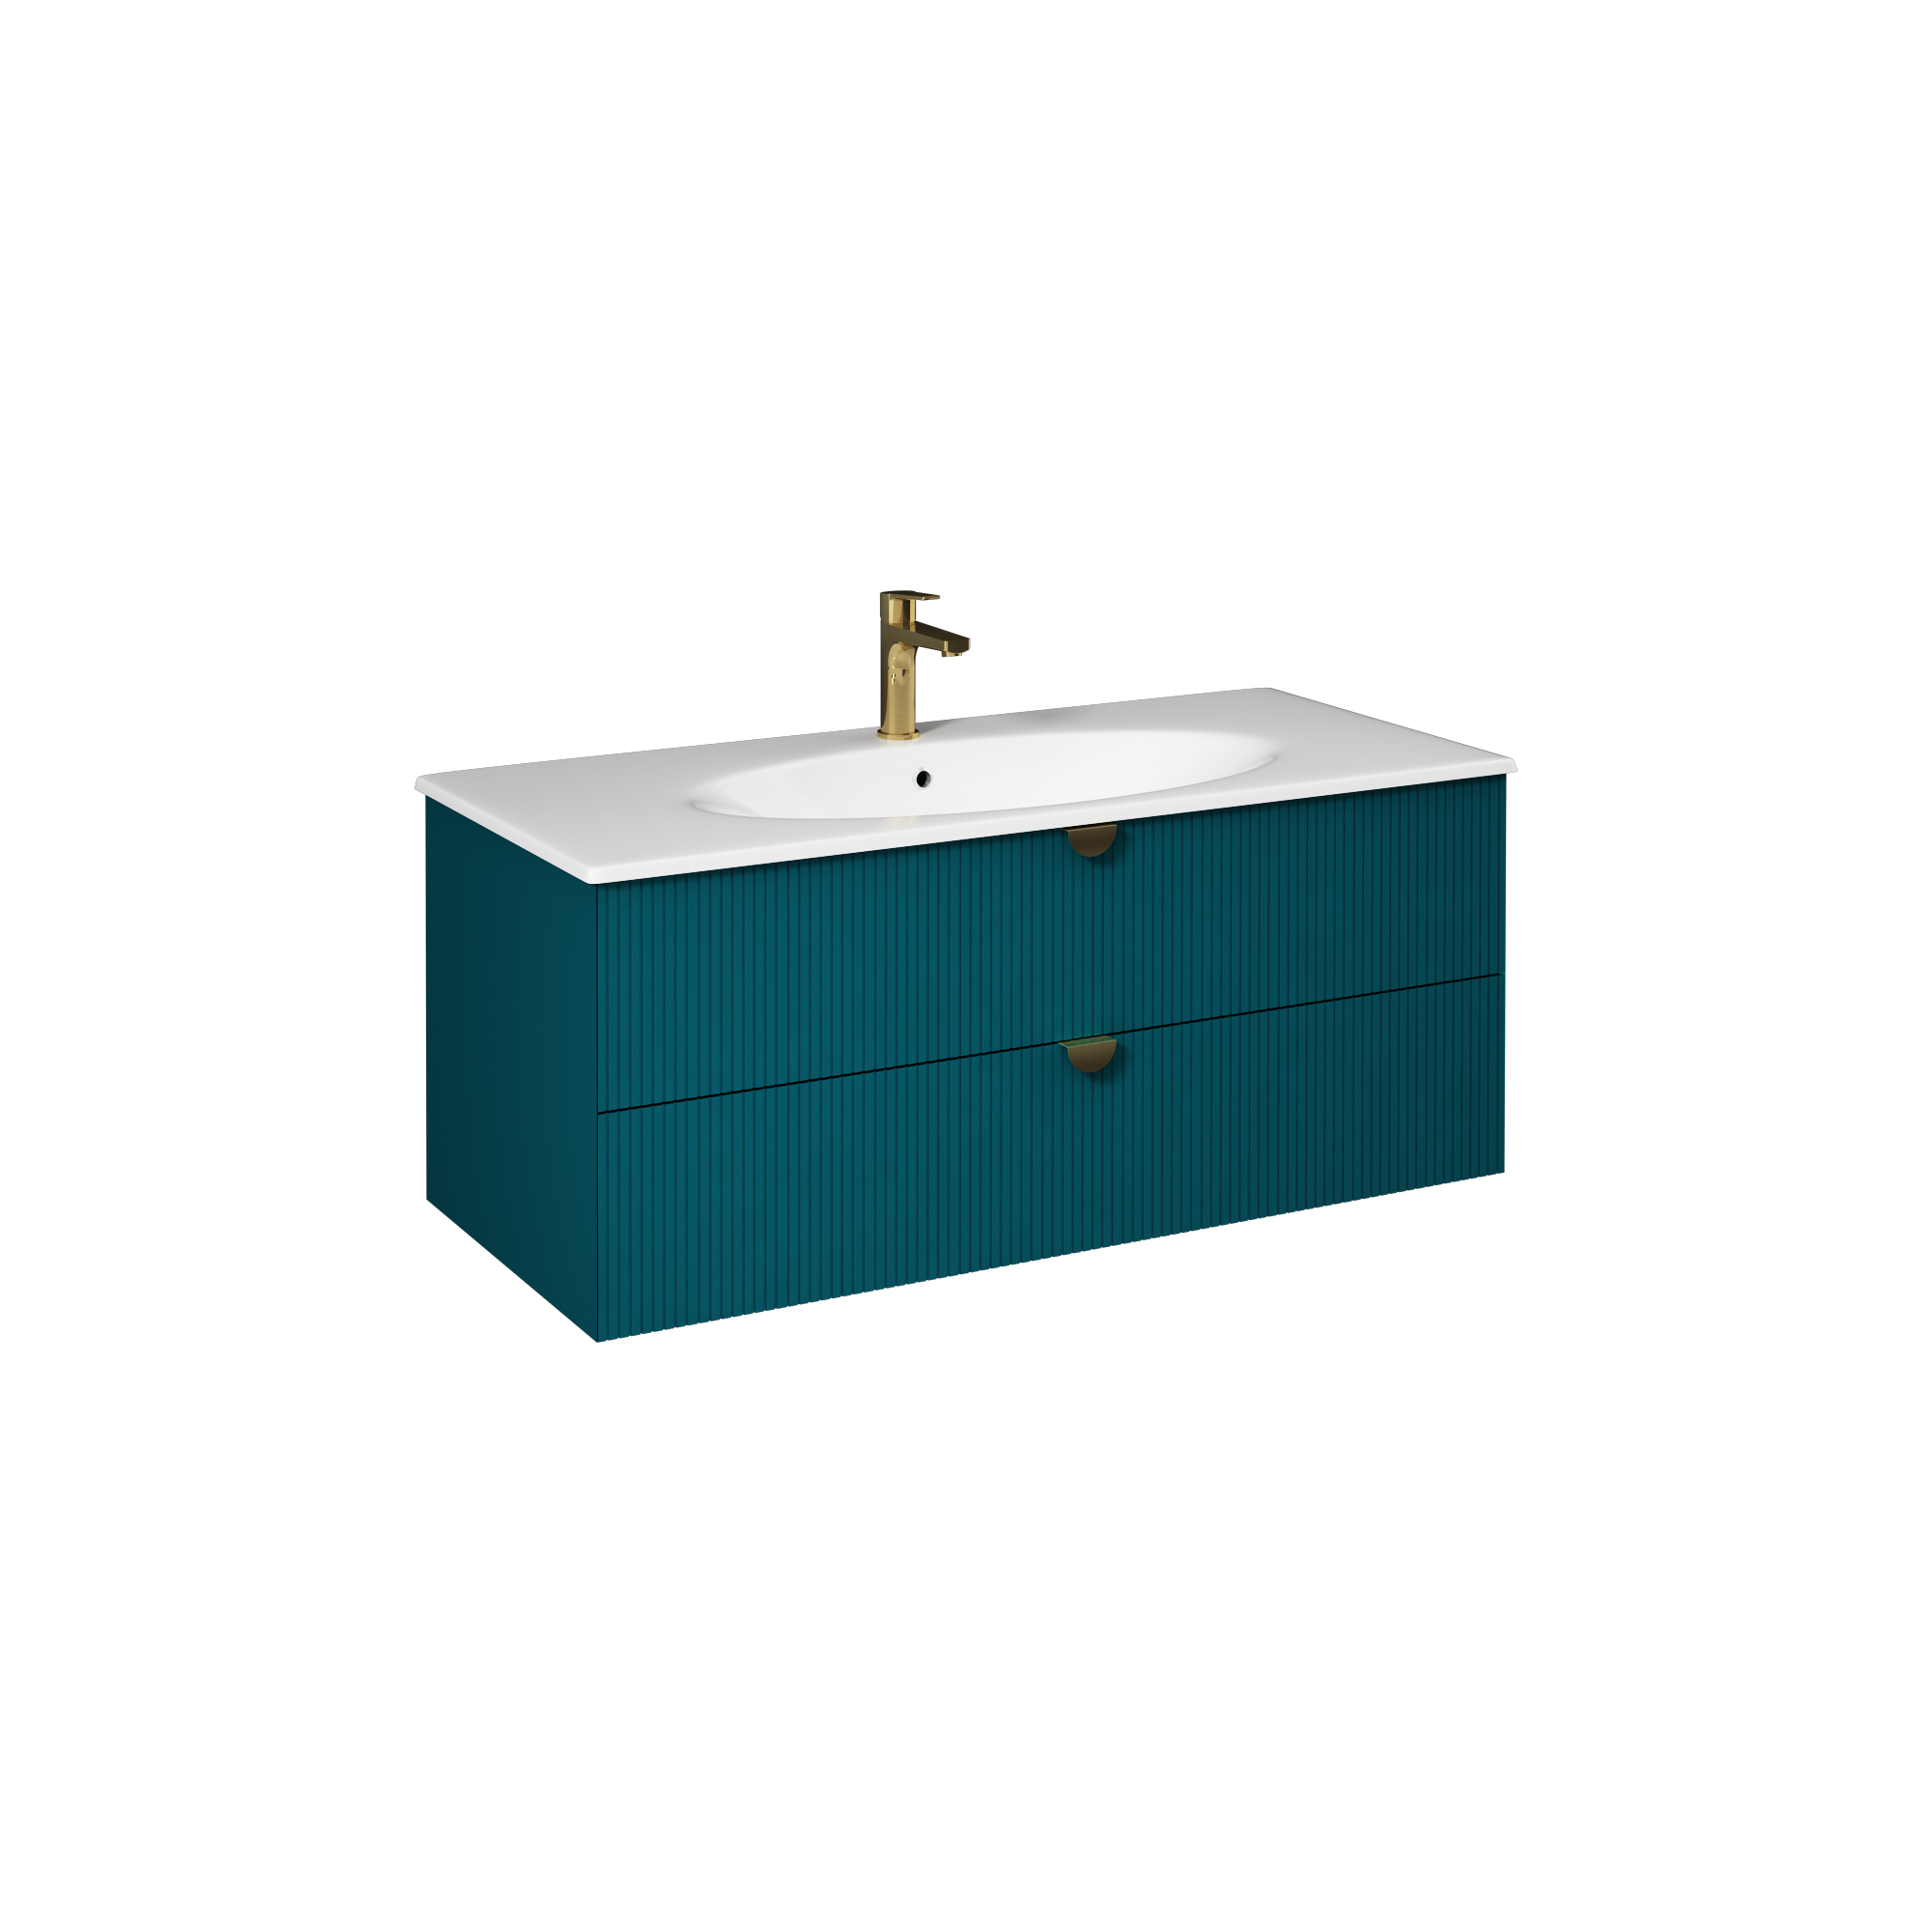 Infinity Washbasin Cabinet, Ruby Red,  (Countertop / Washbasin / Handle, Black 51"